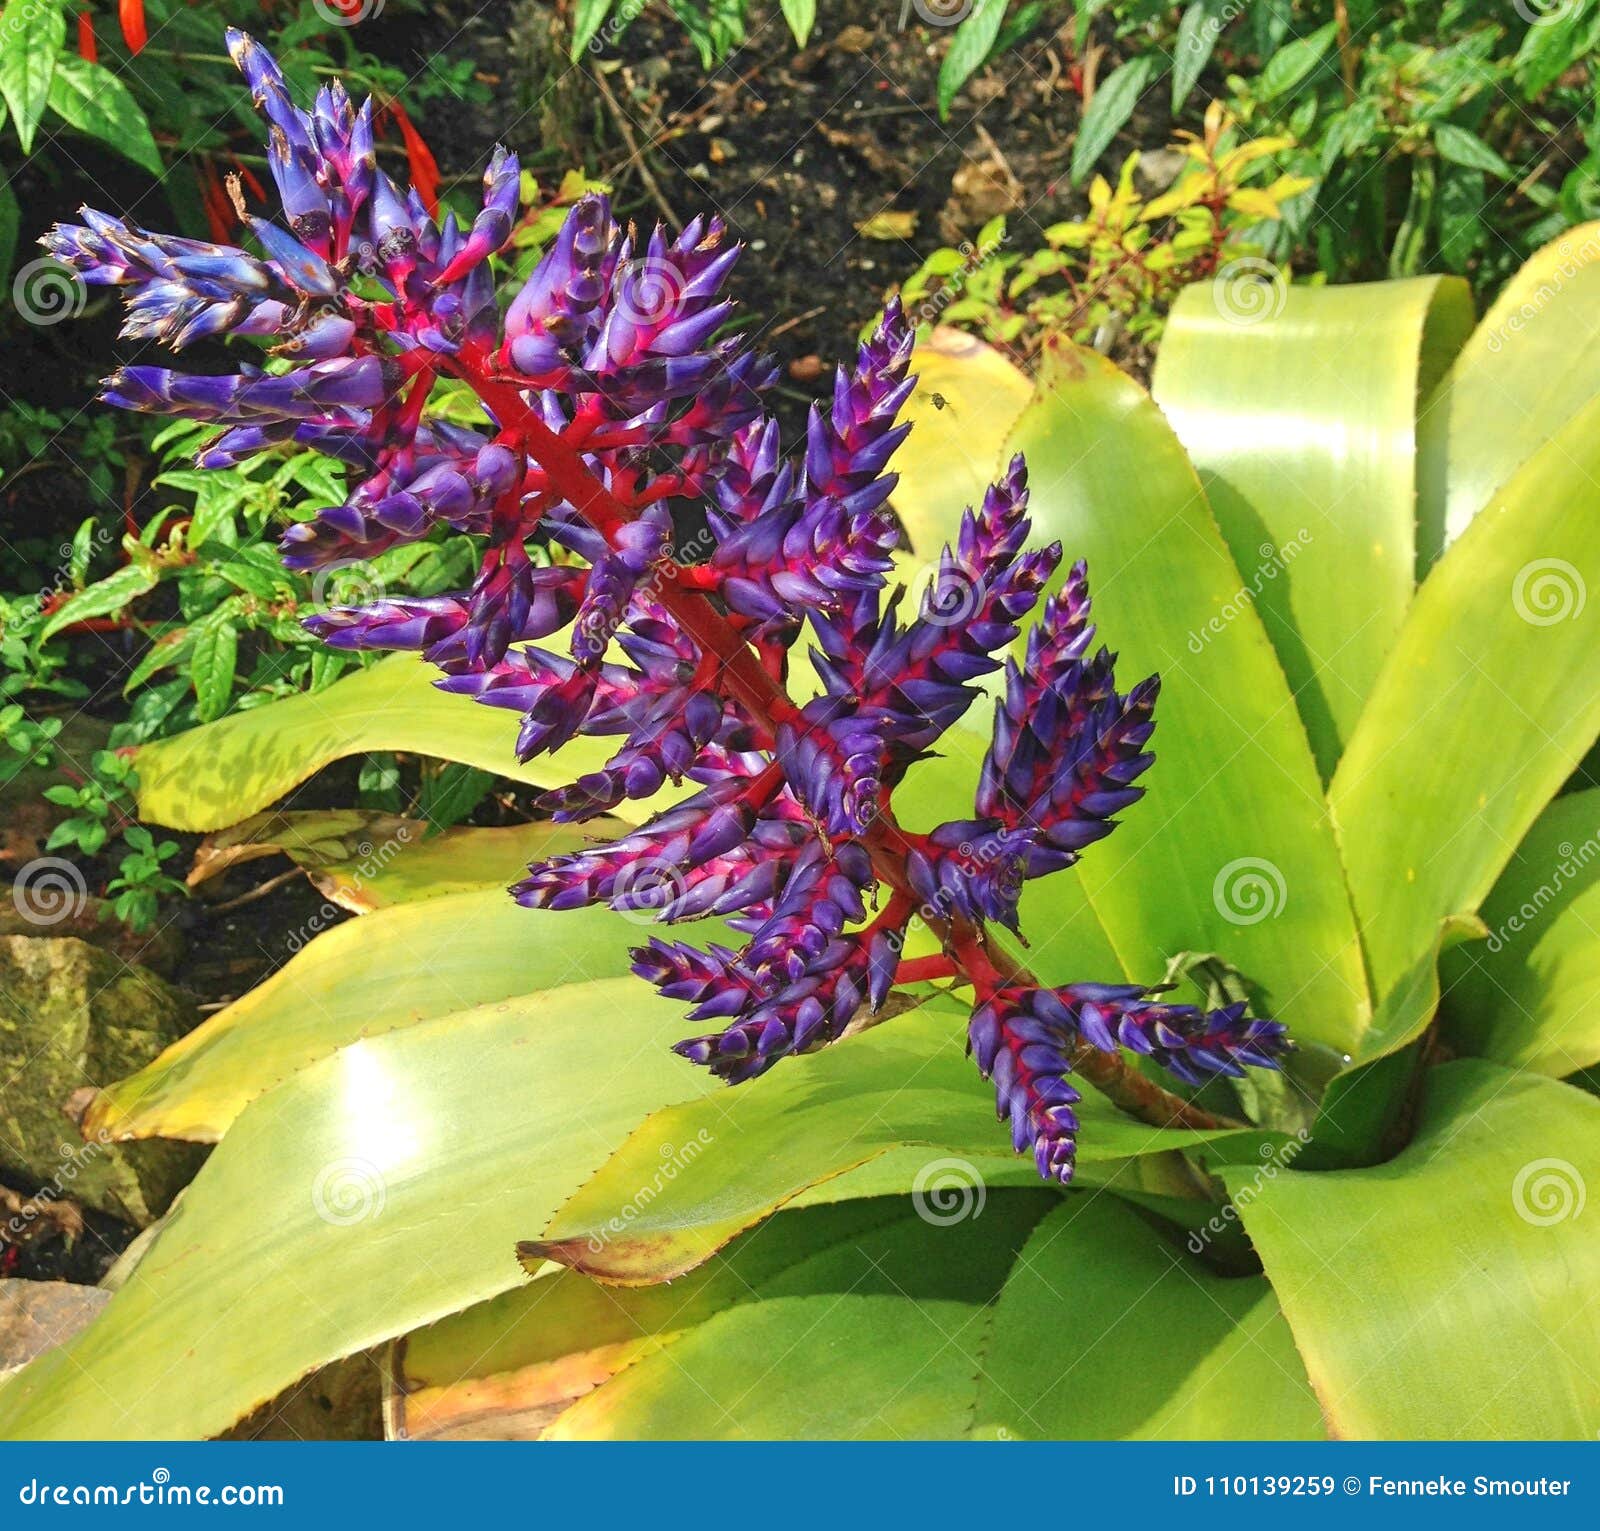 A Tropical Aechmea Blue Tango Flower Stock Image - Image of gardening,  bright: 110139259